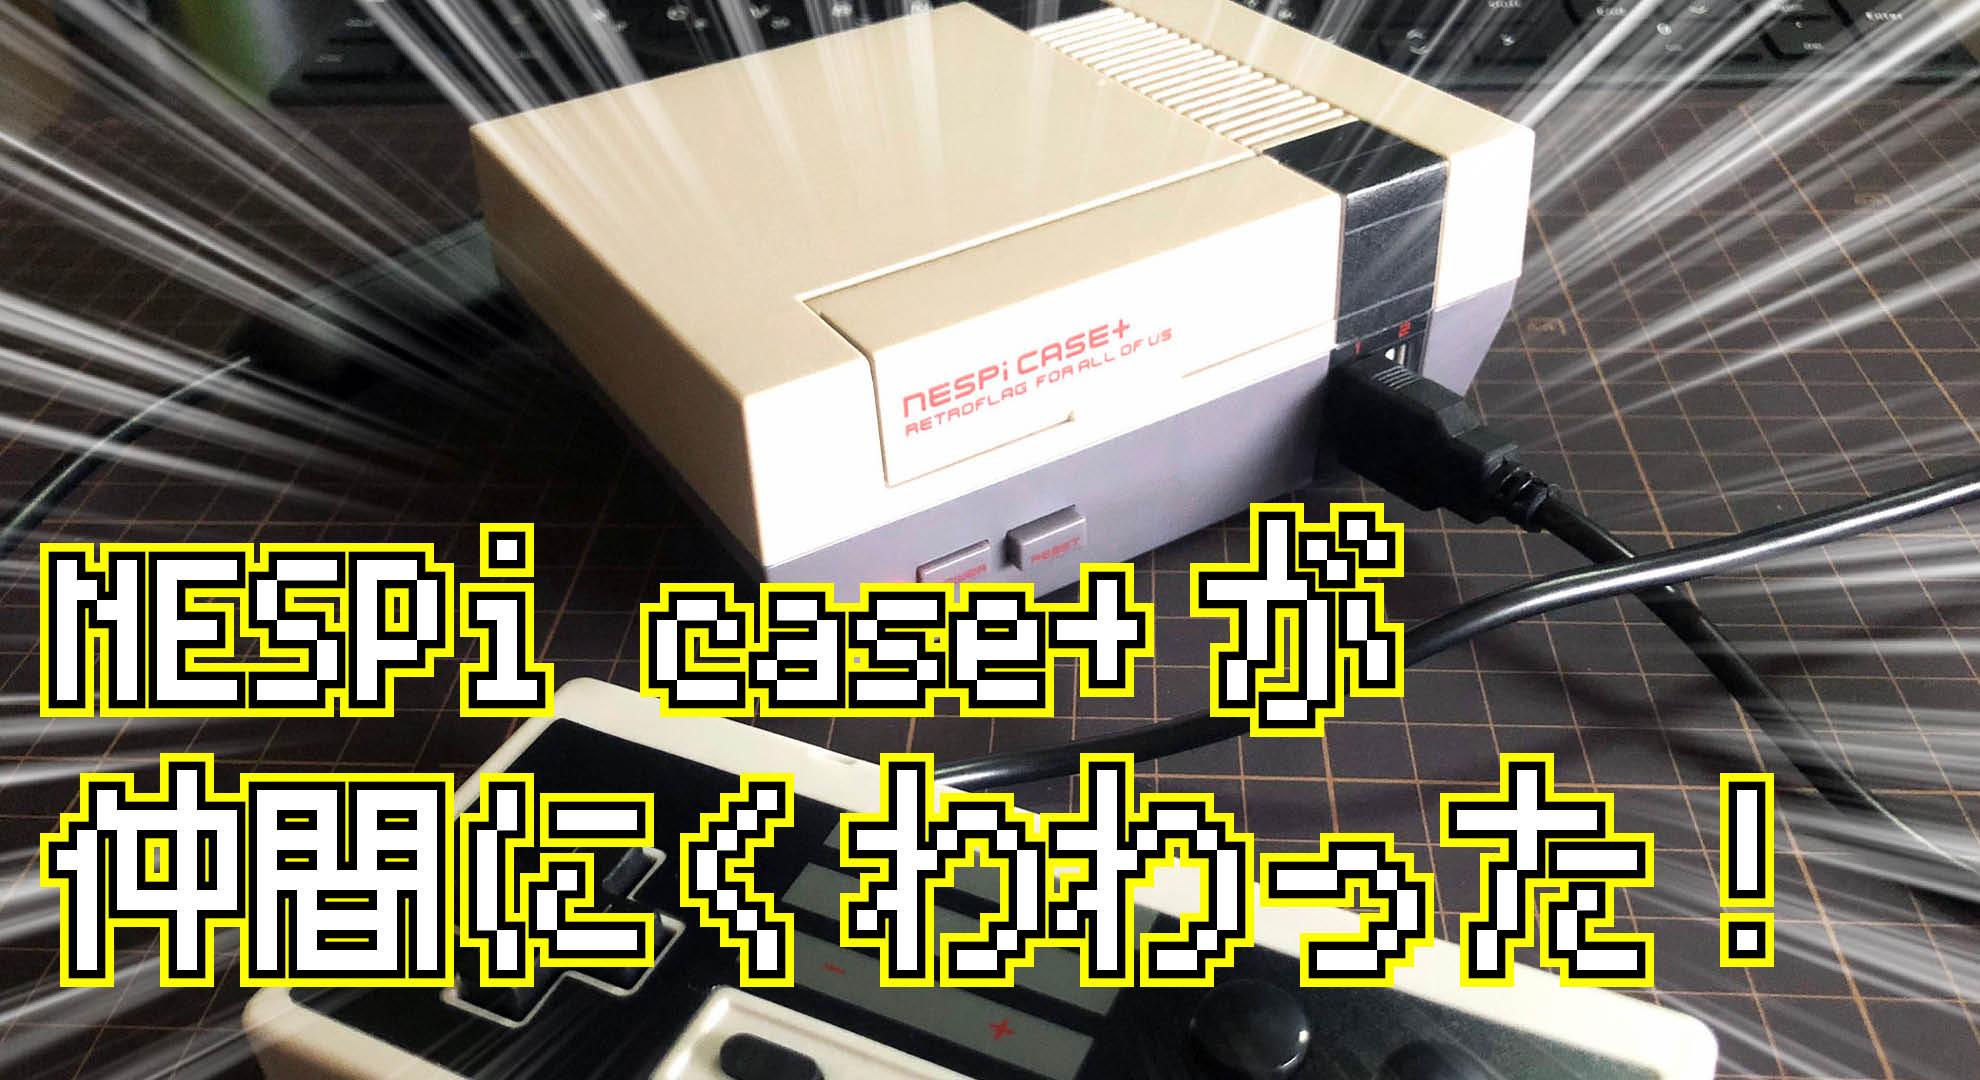 Raspberry Pi 専用ケース NESPi case+ が仲間にくわわった！